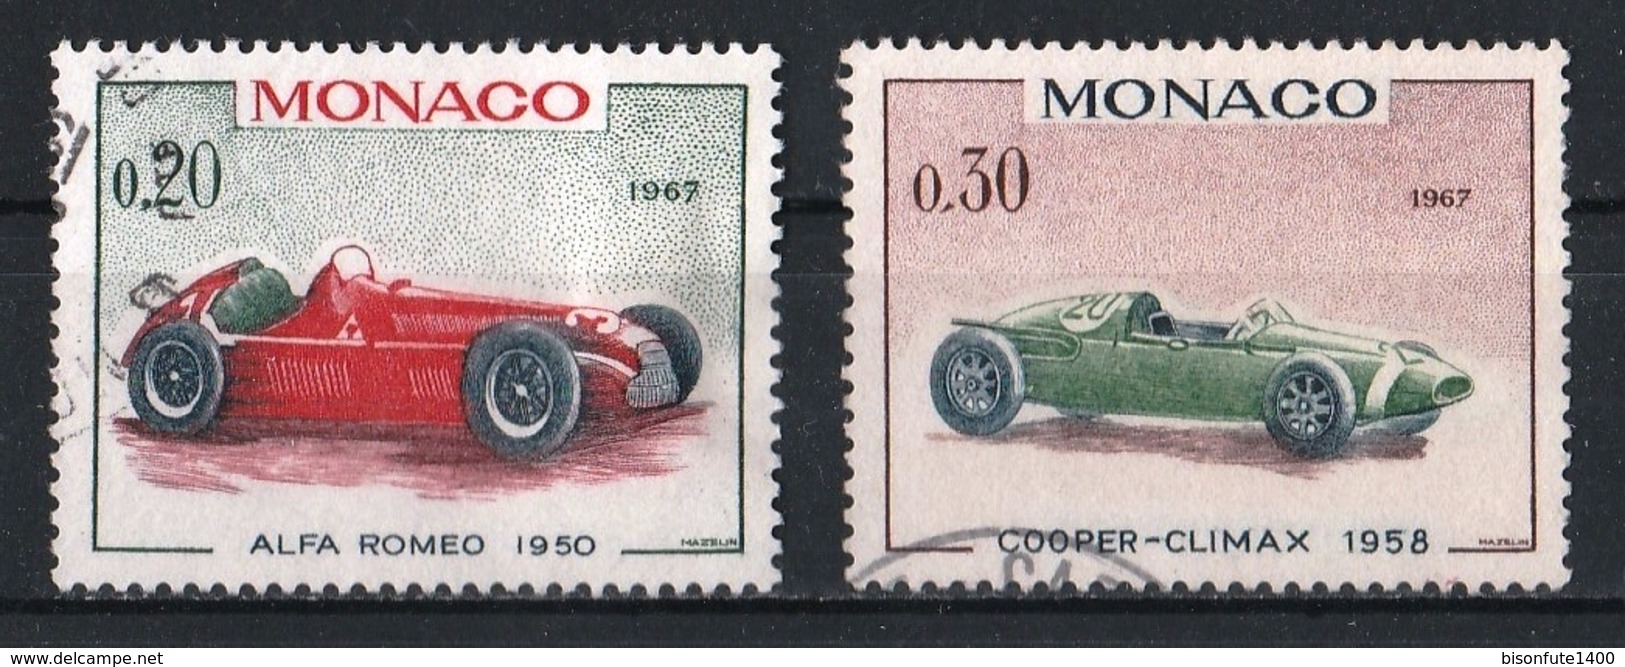 Monaco 1967 : Timbres Yvert & Tellier N° 708 - 709 - 710 - 711 - 713 Et 715. - Usados